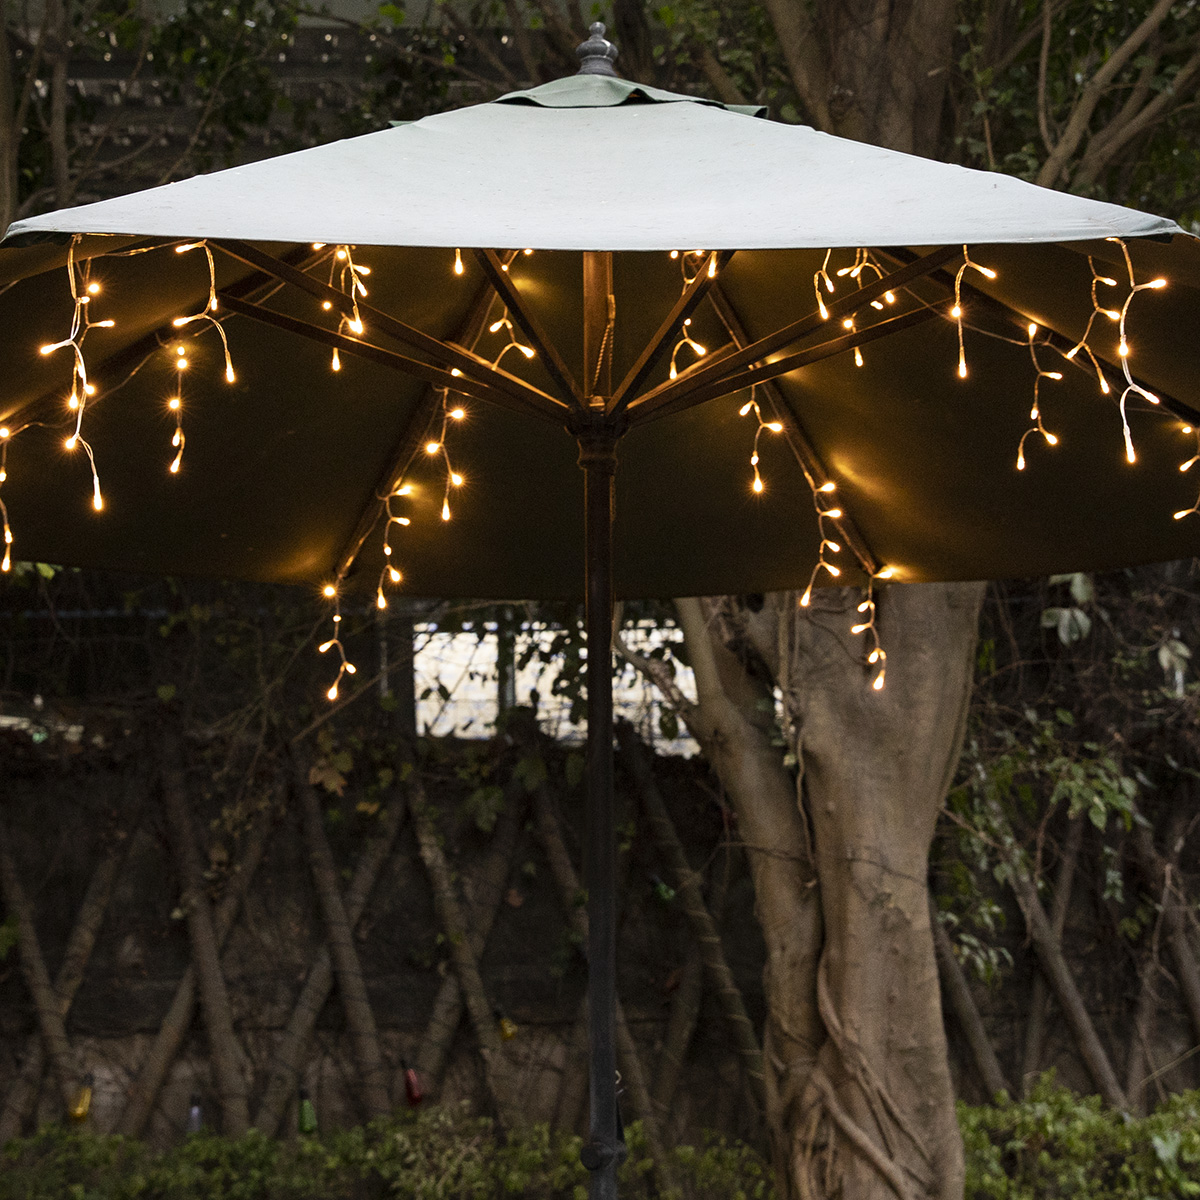 Wholesale Solar Powered Umbrella Lights for Patio Umbrellas | ZHONGXIN Featured Image